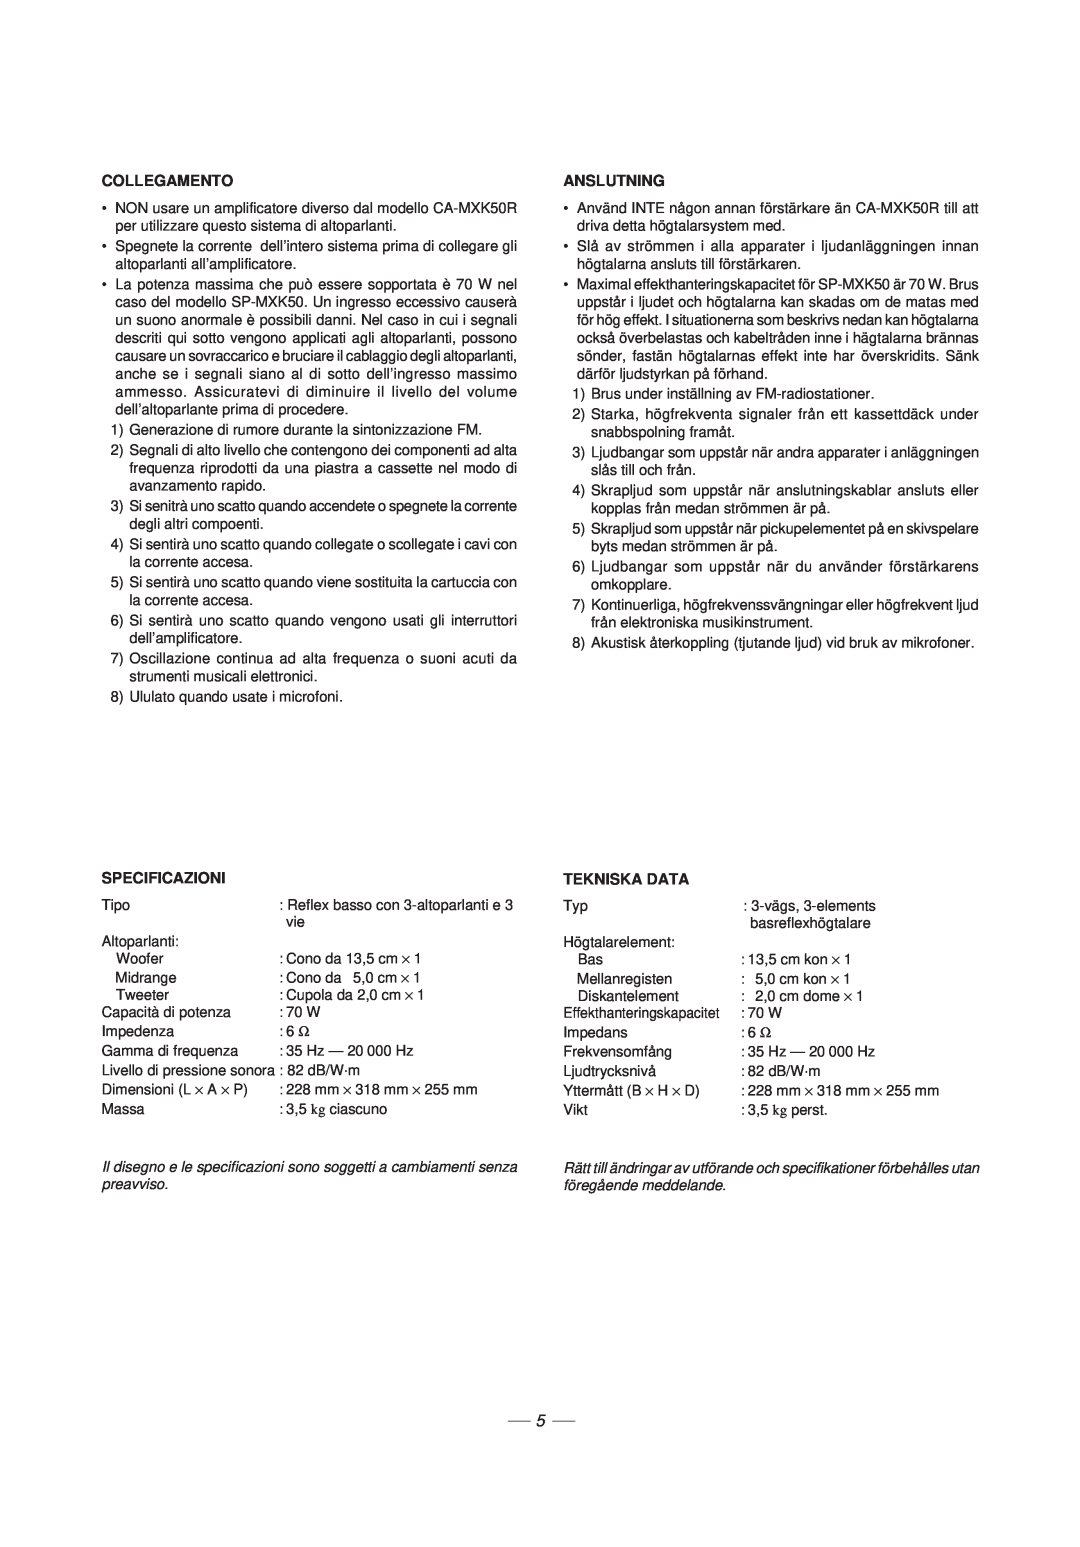 JVC CA-MXK50R manual Collegamento, Anslutning, Specificazioni, Tekniska Data 